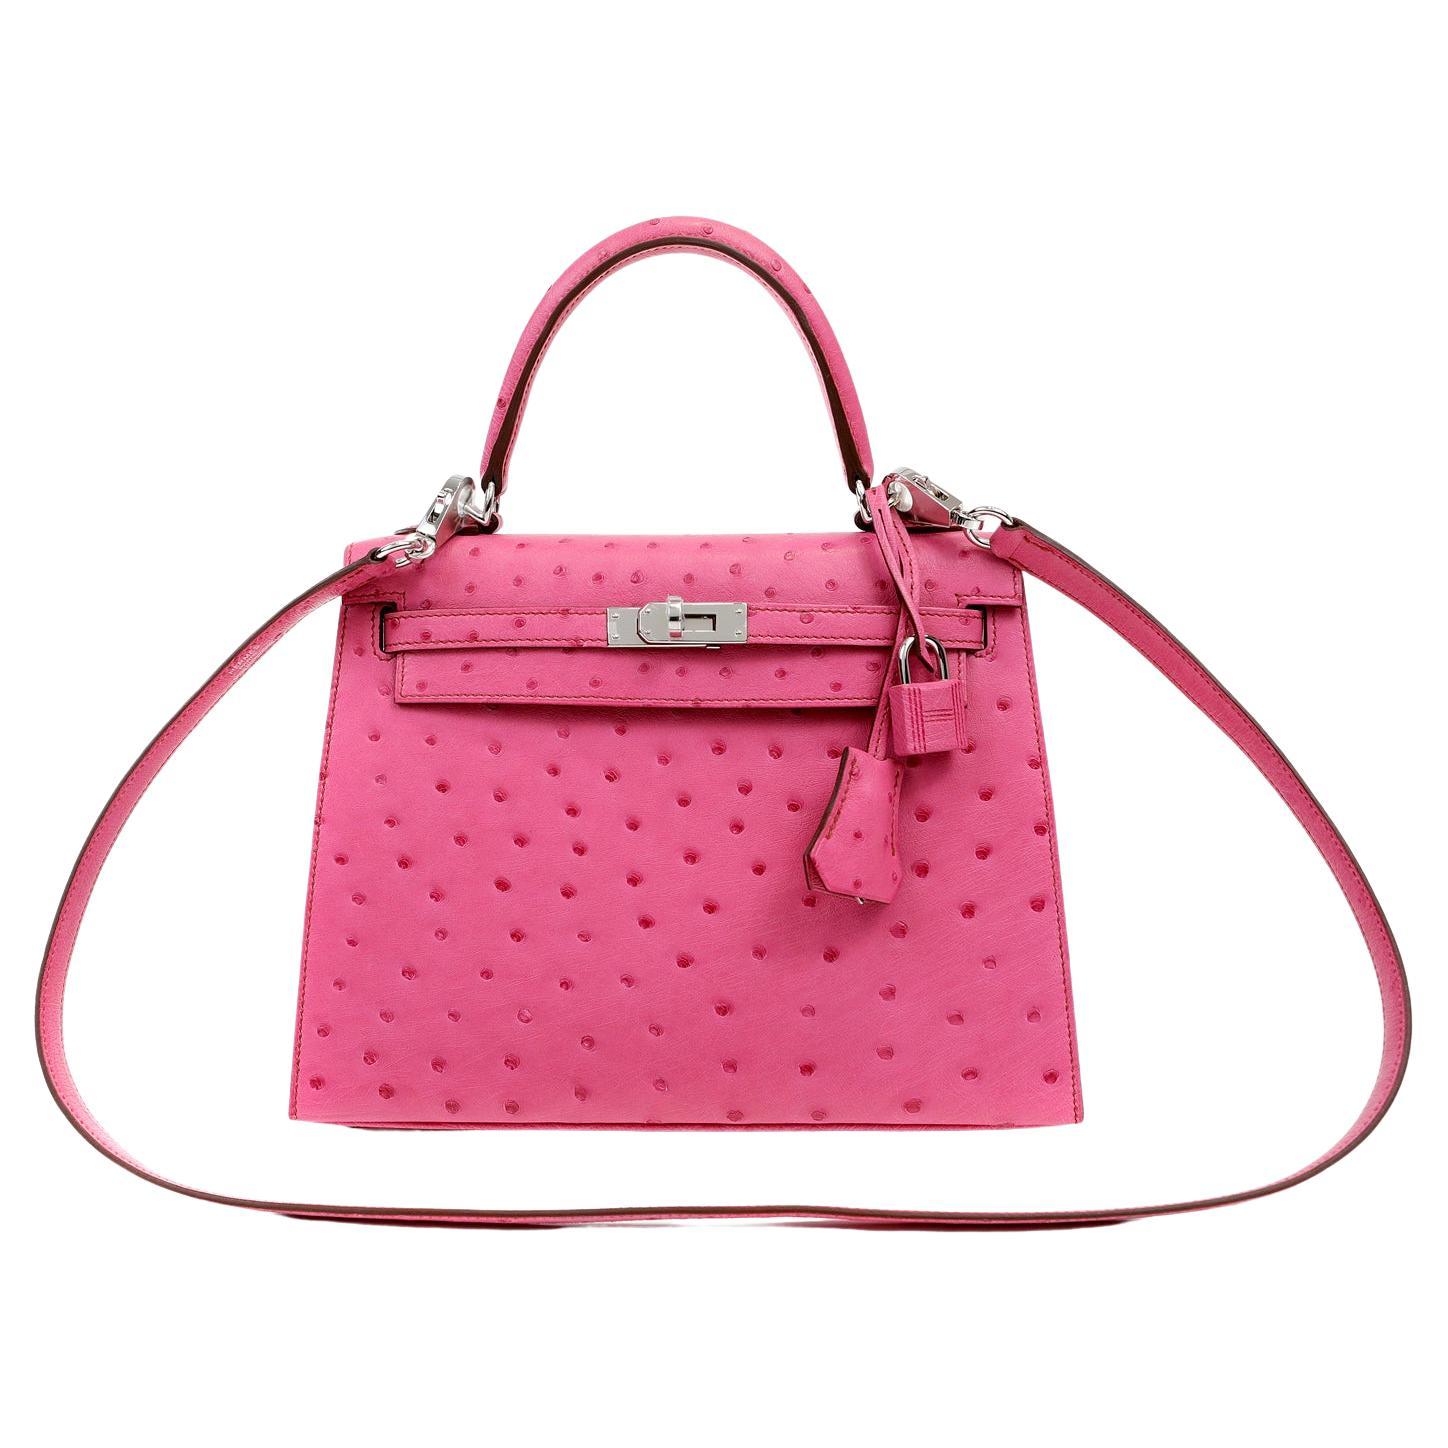 Hermès Pink Ostrich 25 cm Sellier Kelly Bag Limited Edition